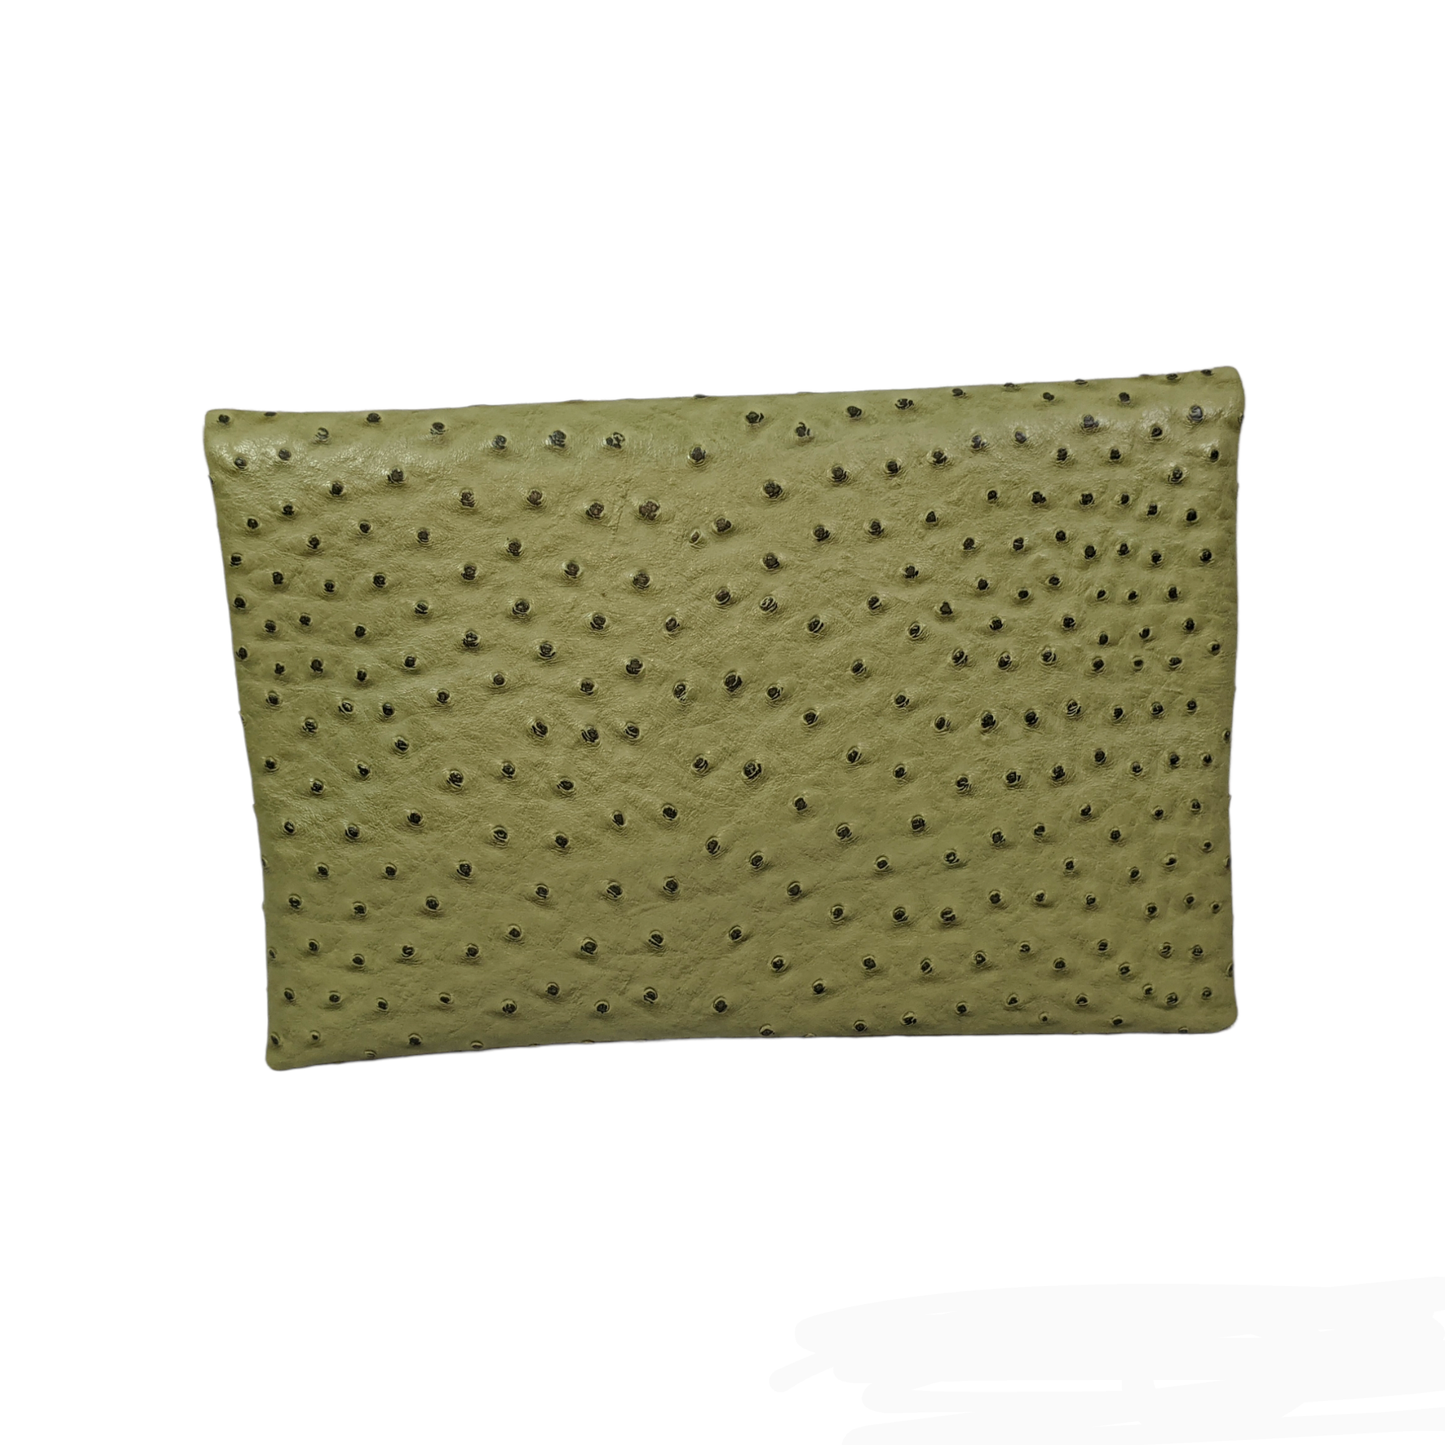 Green Vegan Leather Ostrich envelope purse